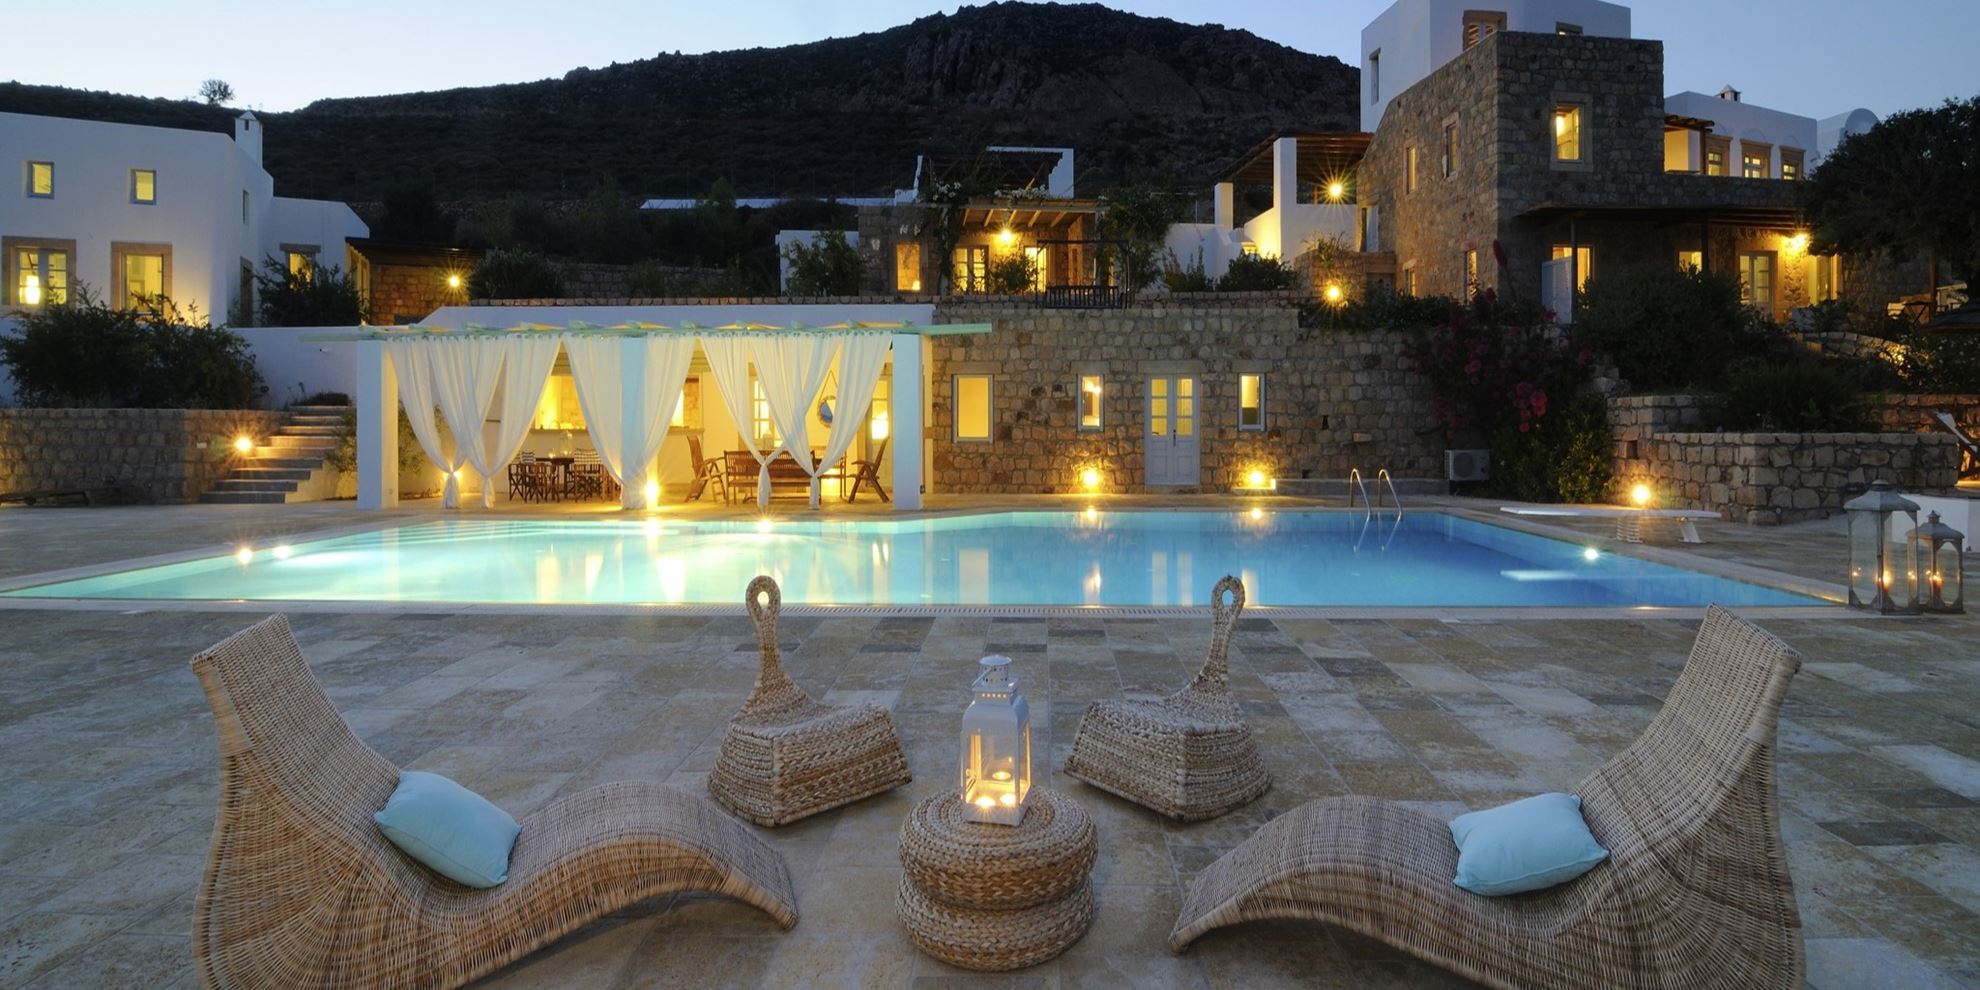 Aria Hotels includes Onar Patmos in their portfolio